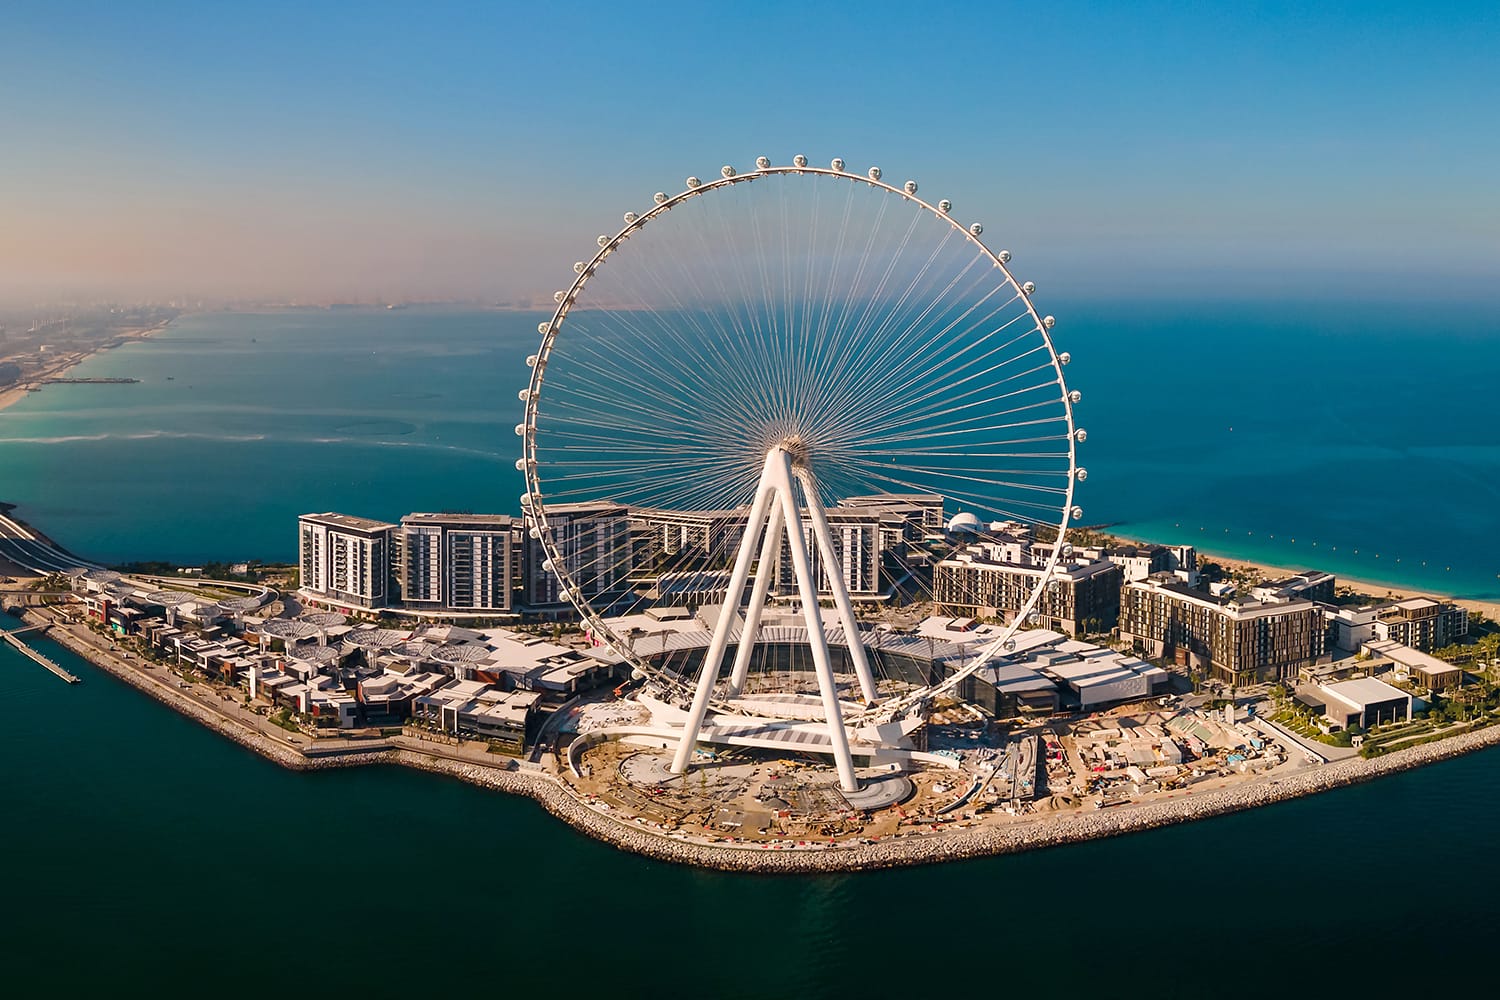 An aerial view of Bluewaters island and Ain Dubai ferris wheel